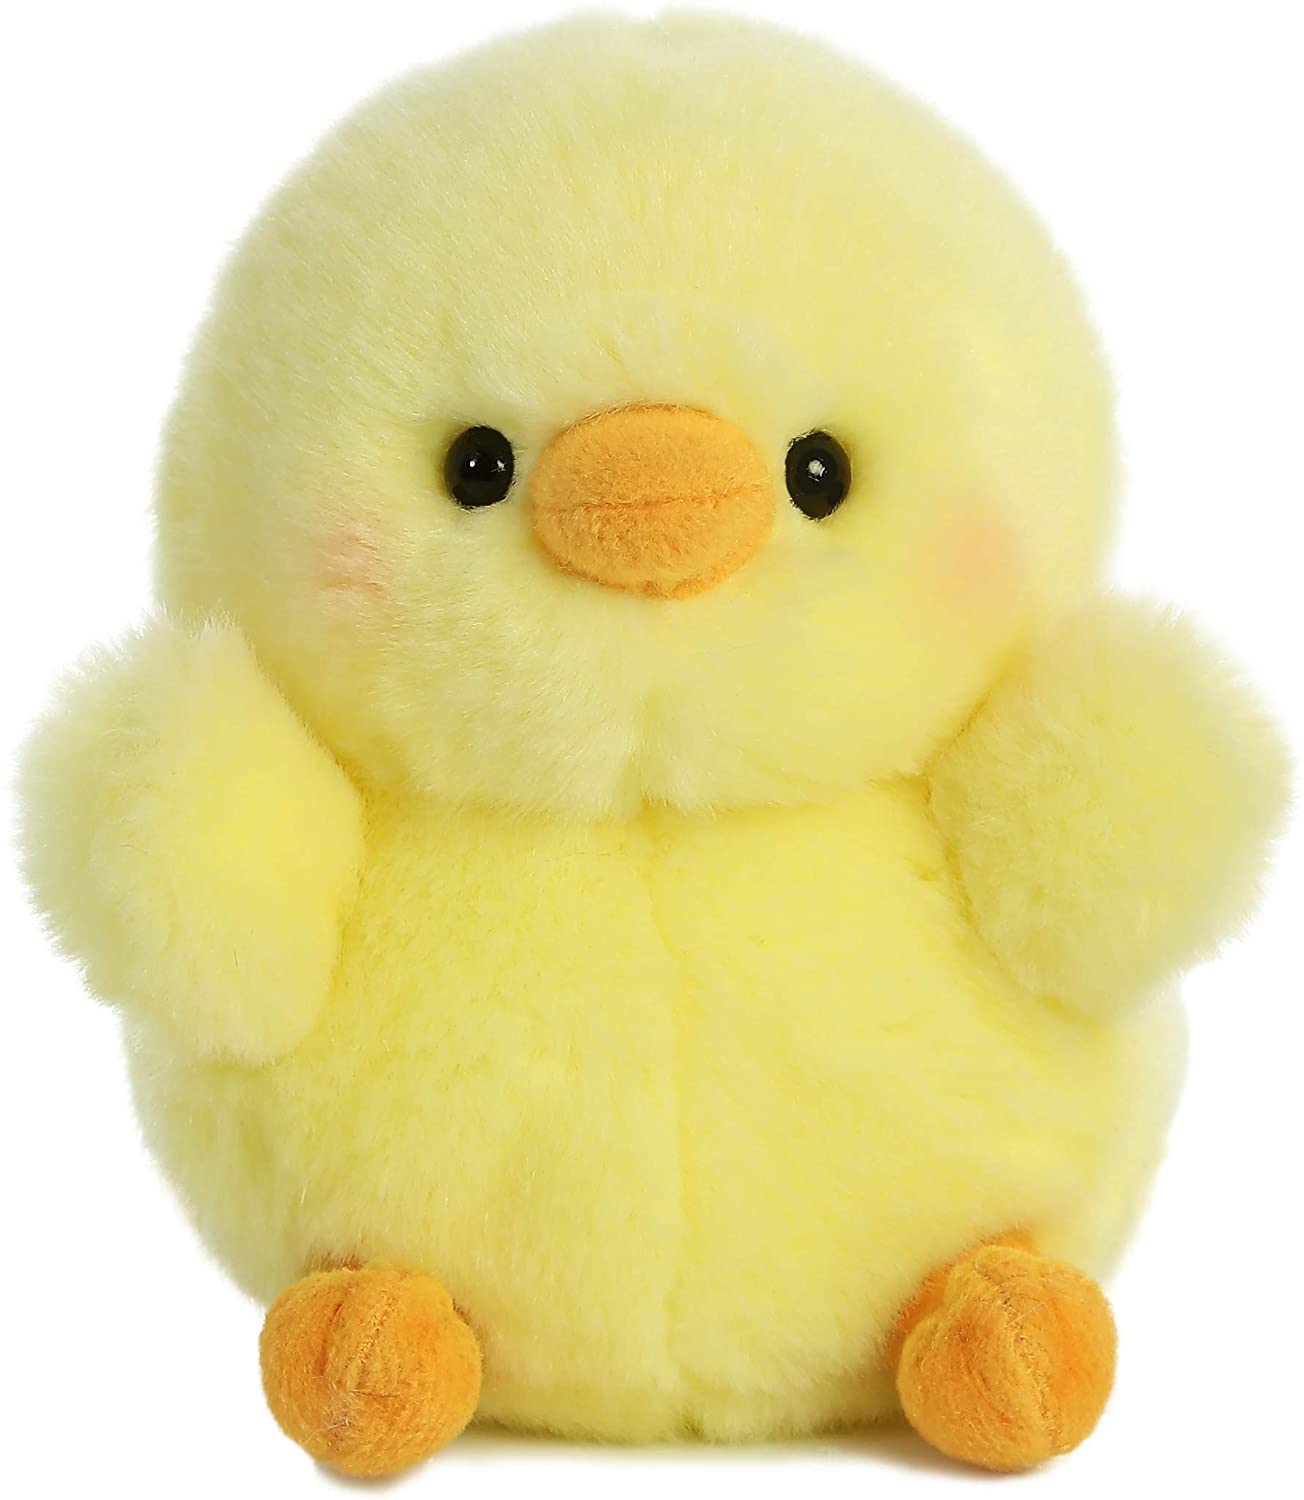 Stuffed yellow baby Chick